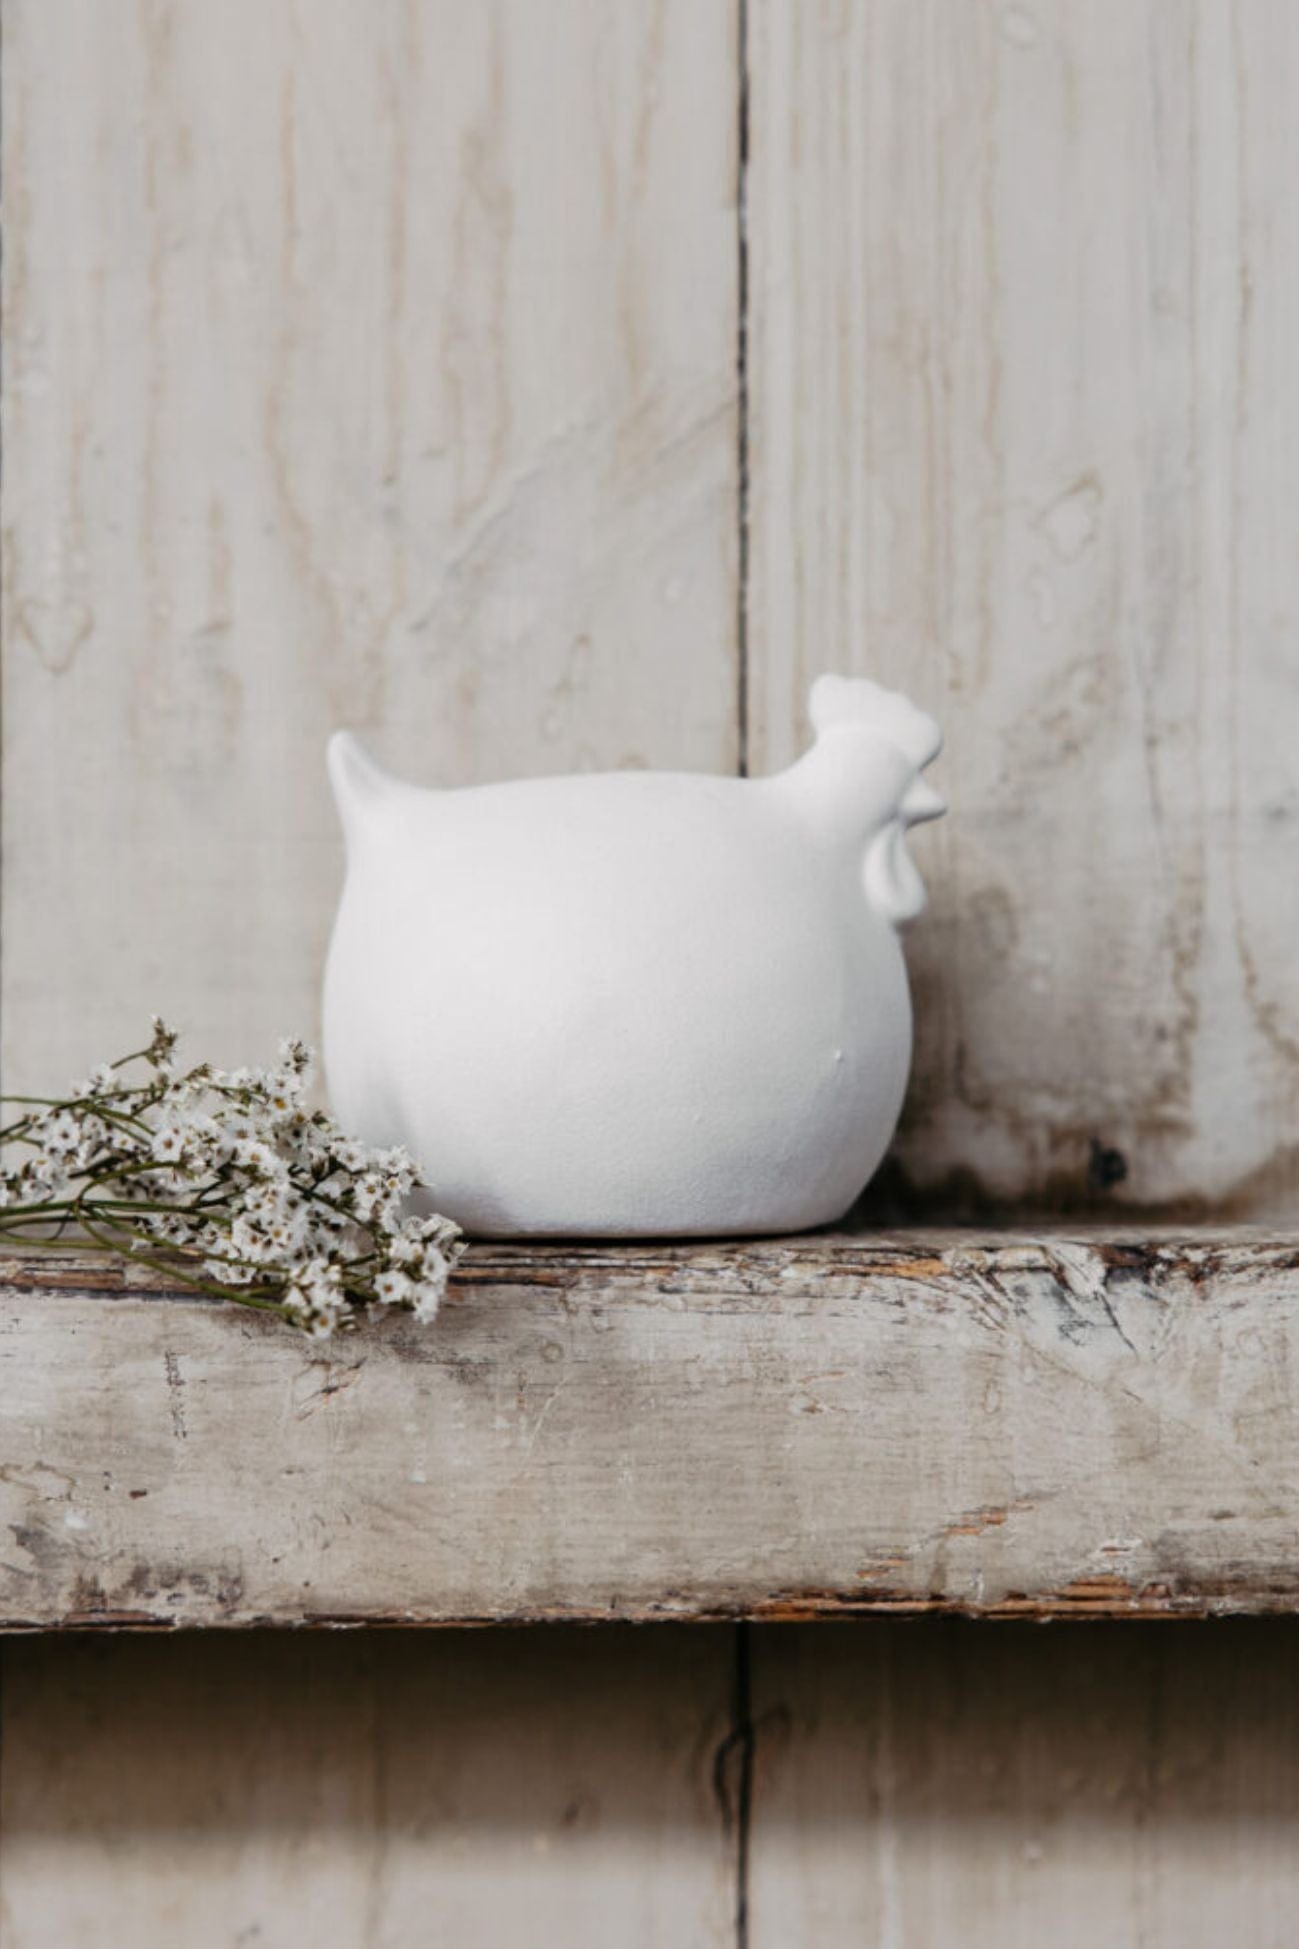 Storefactory Scandinavia Ruth Ruth - Gallinella decorativa in ceramica bianca | Storefactory Scandinavia Medio